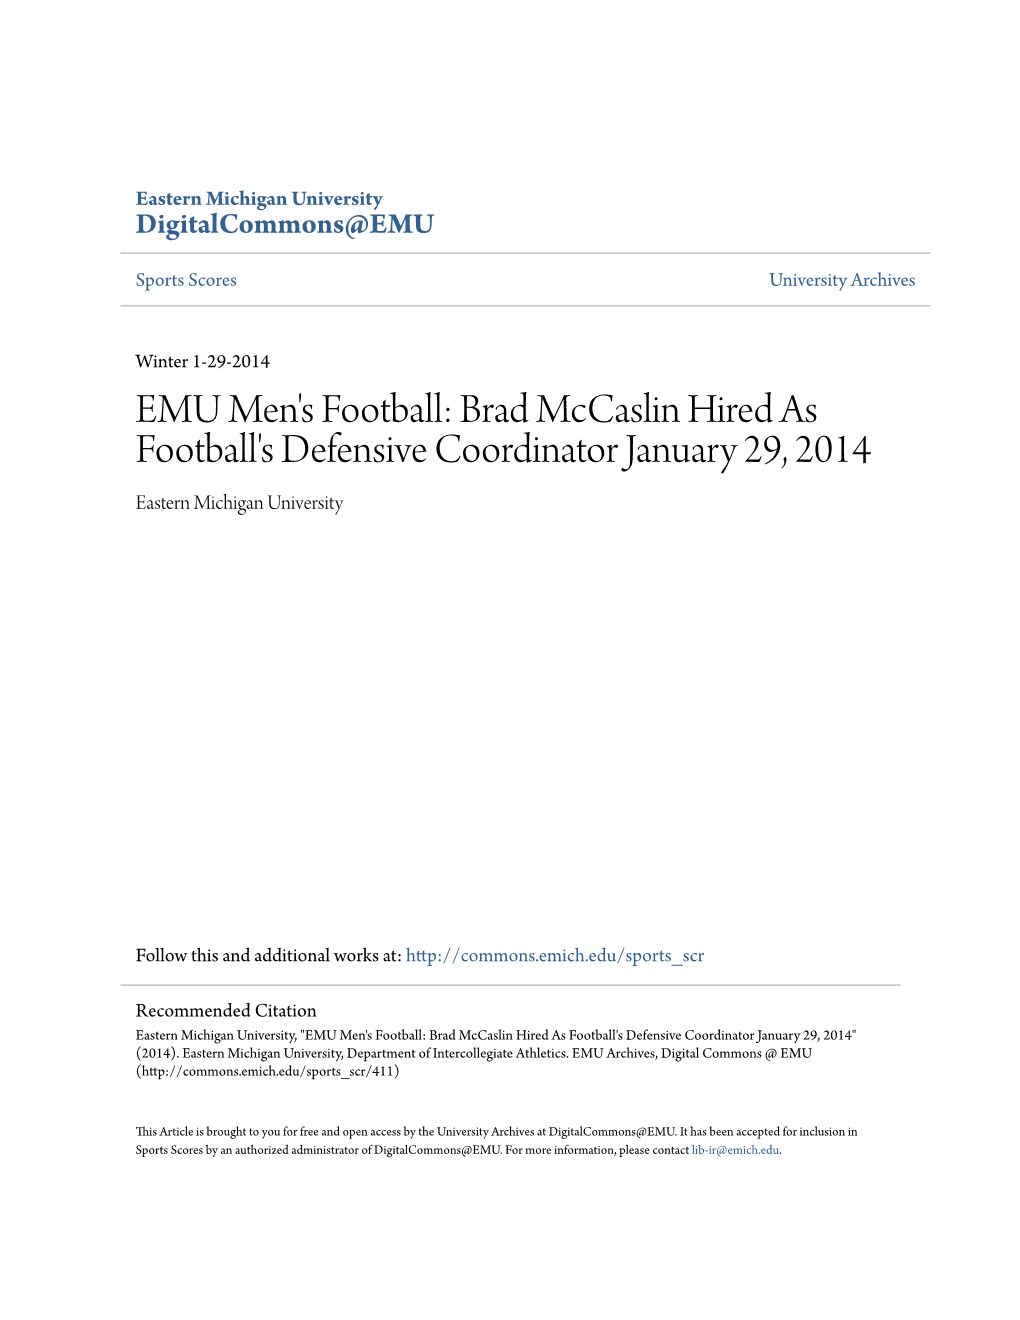 EMU Men's Football: Brad Mccaslin Hired As Football's Defensive Coordinator January 29, 2014 Eastern Michigan University